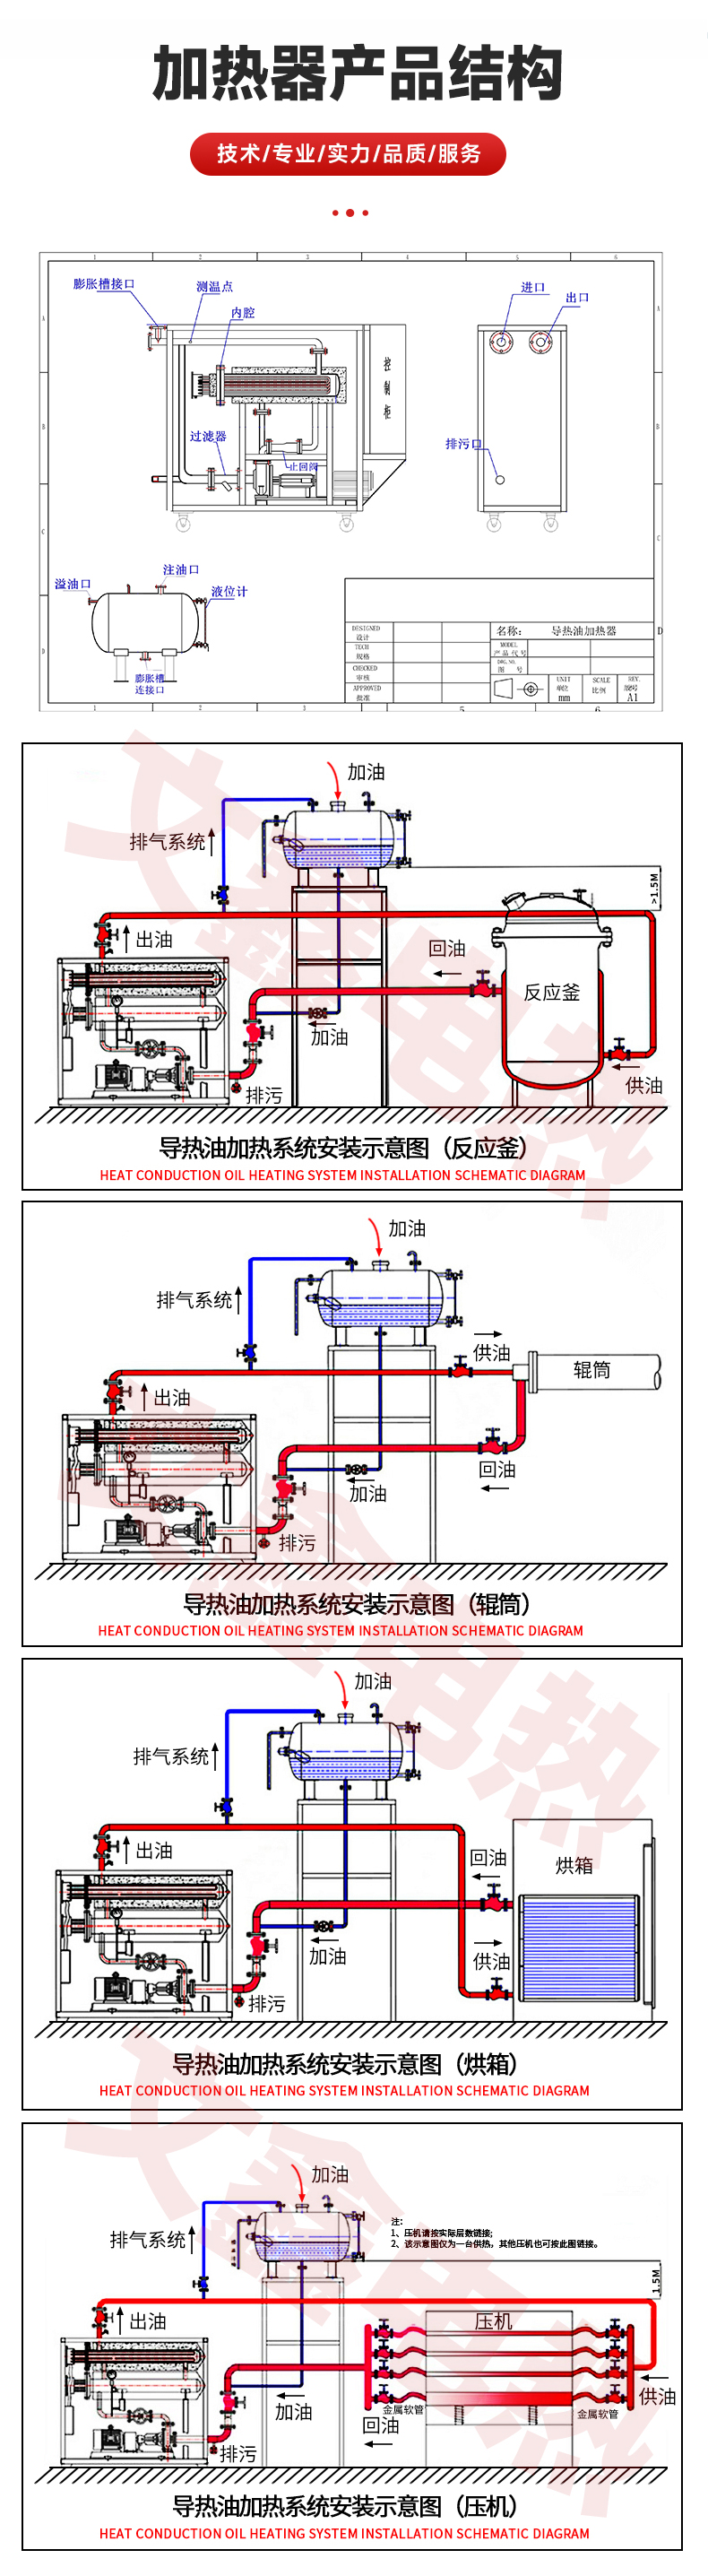 Electric heating thermal oil furnace Thermal oil electric heating system Circulating heating oil boiler